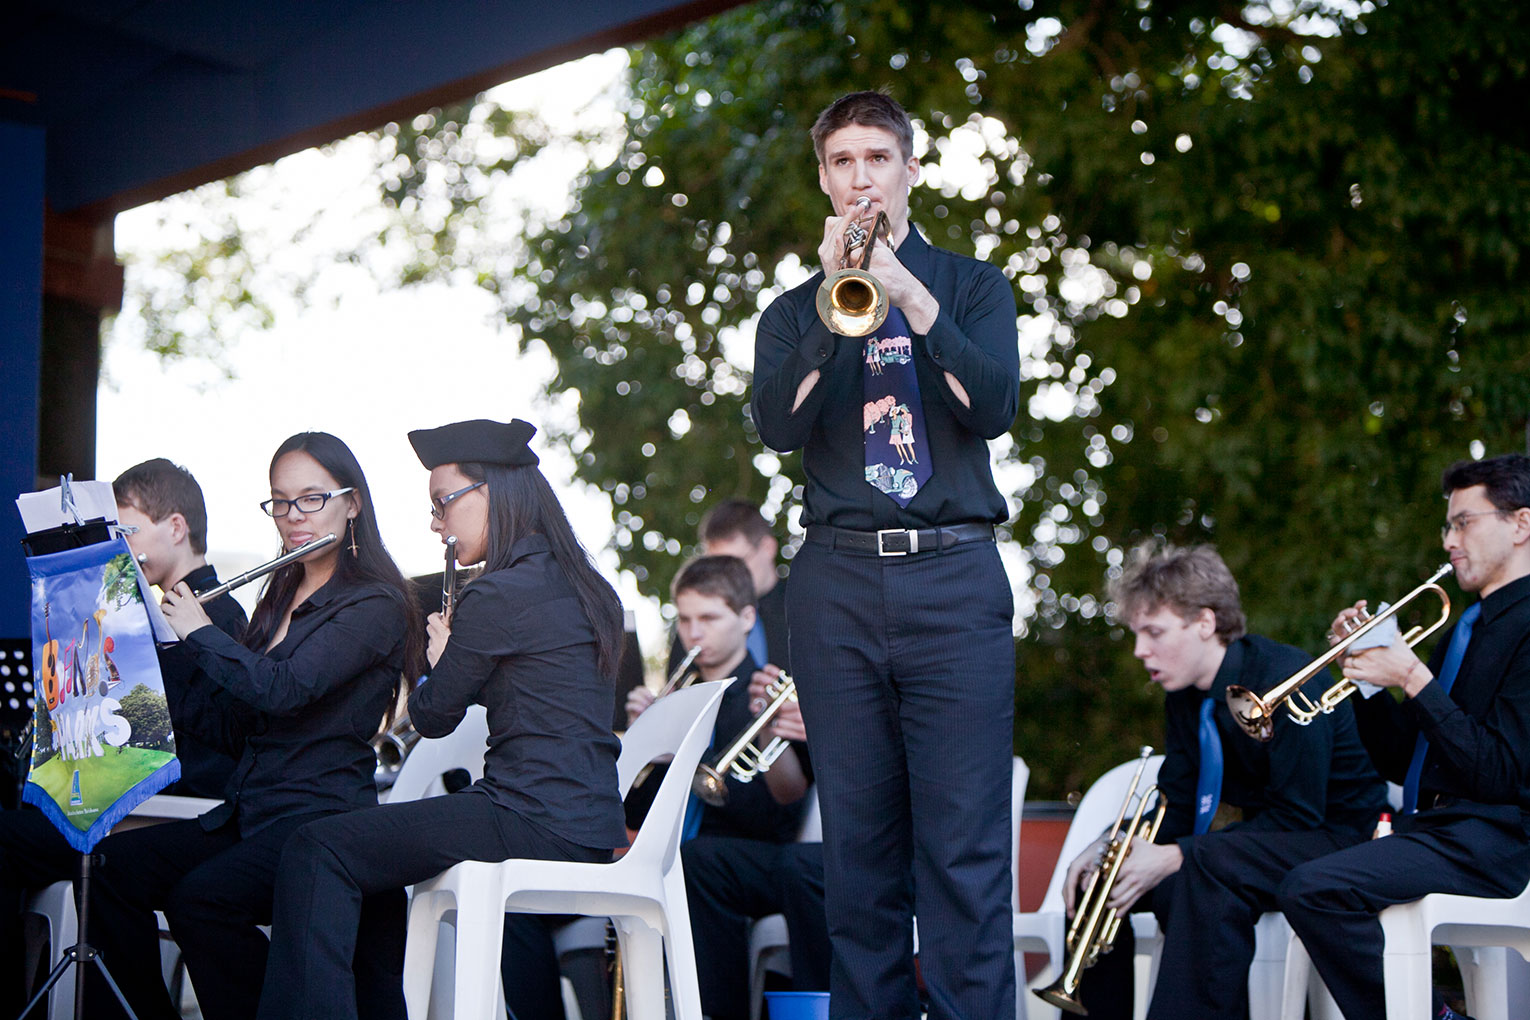 Brisbane Municipal Concert Band